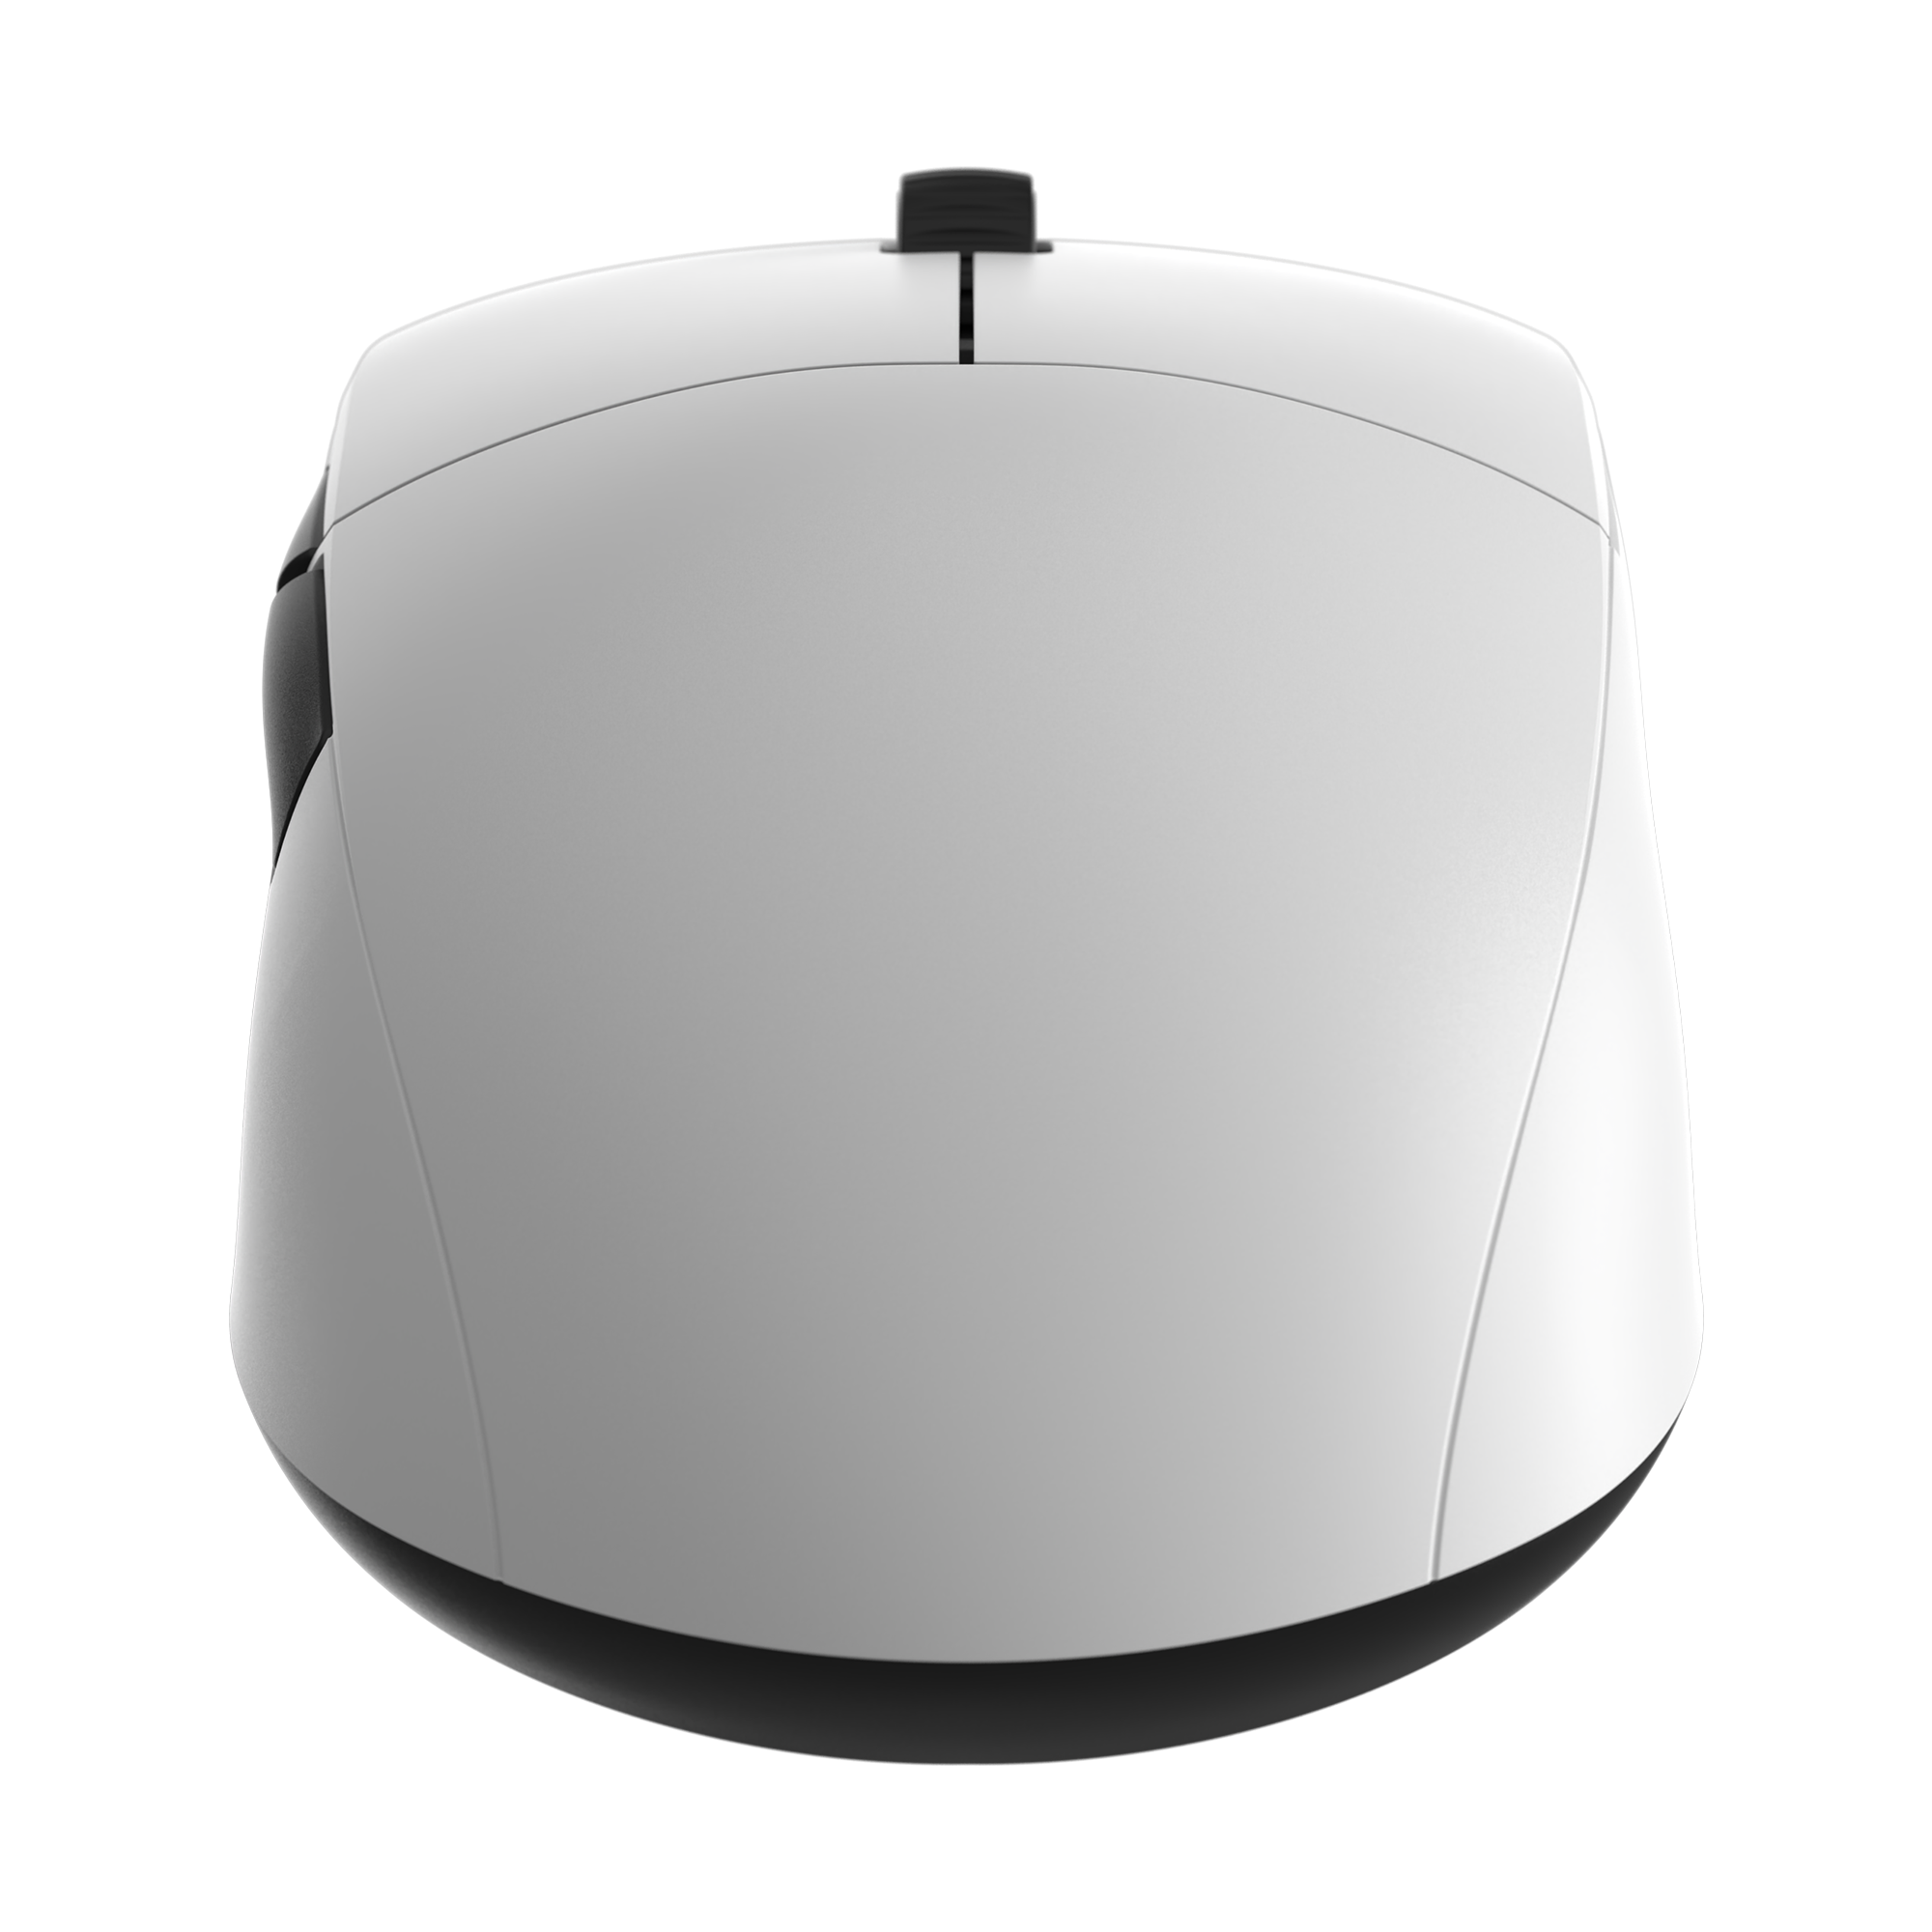 Endgame Gear - Endgame Gear XM2WE Wireless Optical Lightweight Gaming Mouse - White (EGG-XM2WE-WHT)